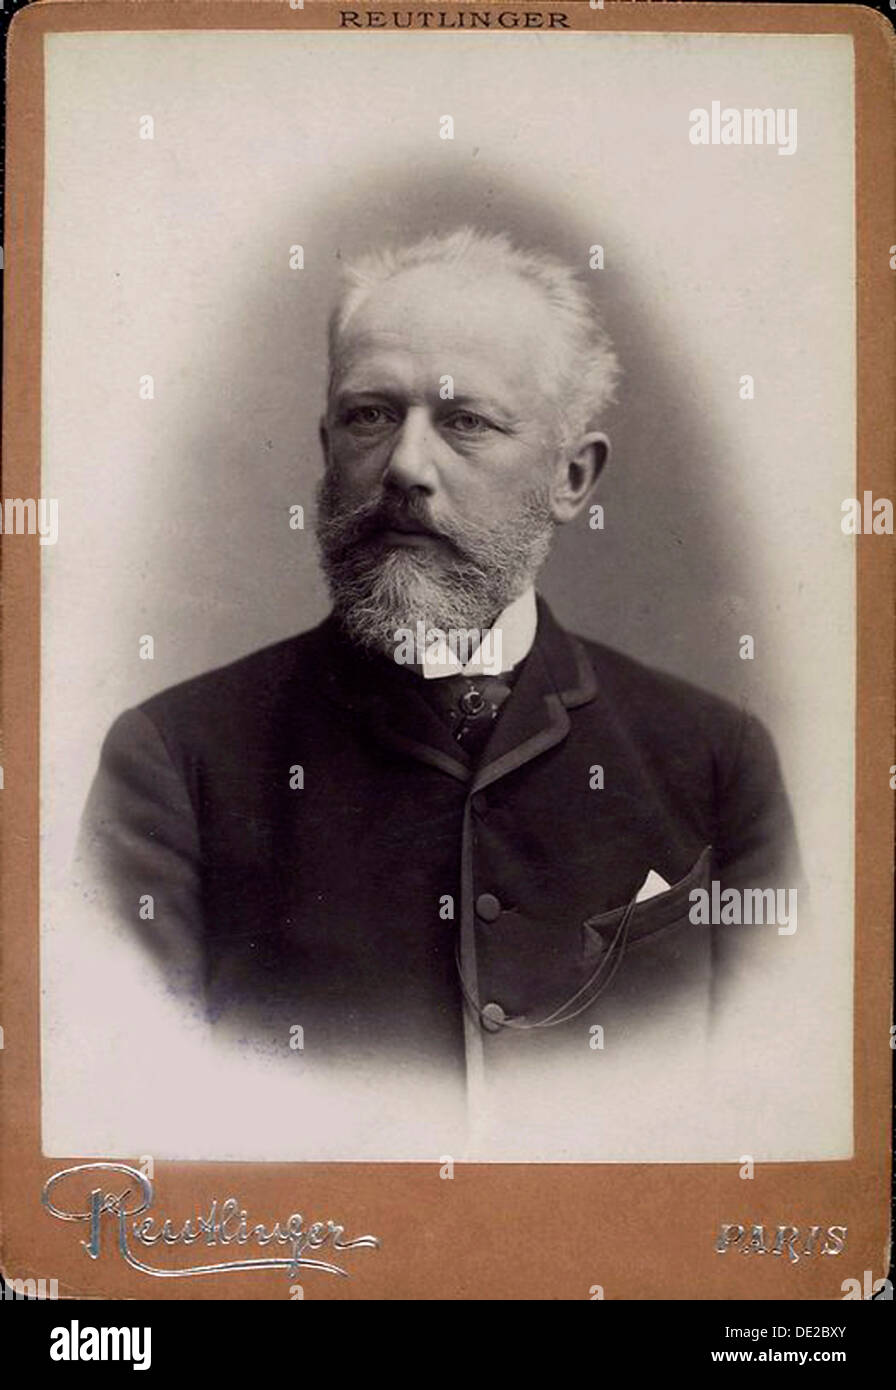 Peter Ilich Tchaikovsky, russischer Komponist, Ende des 19. Jahrhunderts. Künstler: Charles Reutlinger Stockfoto